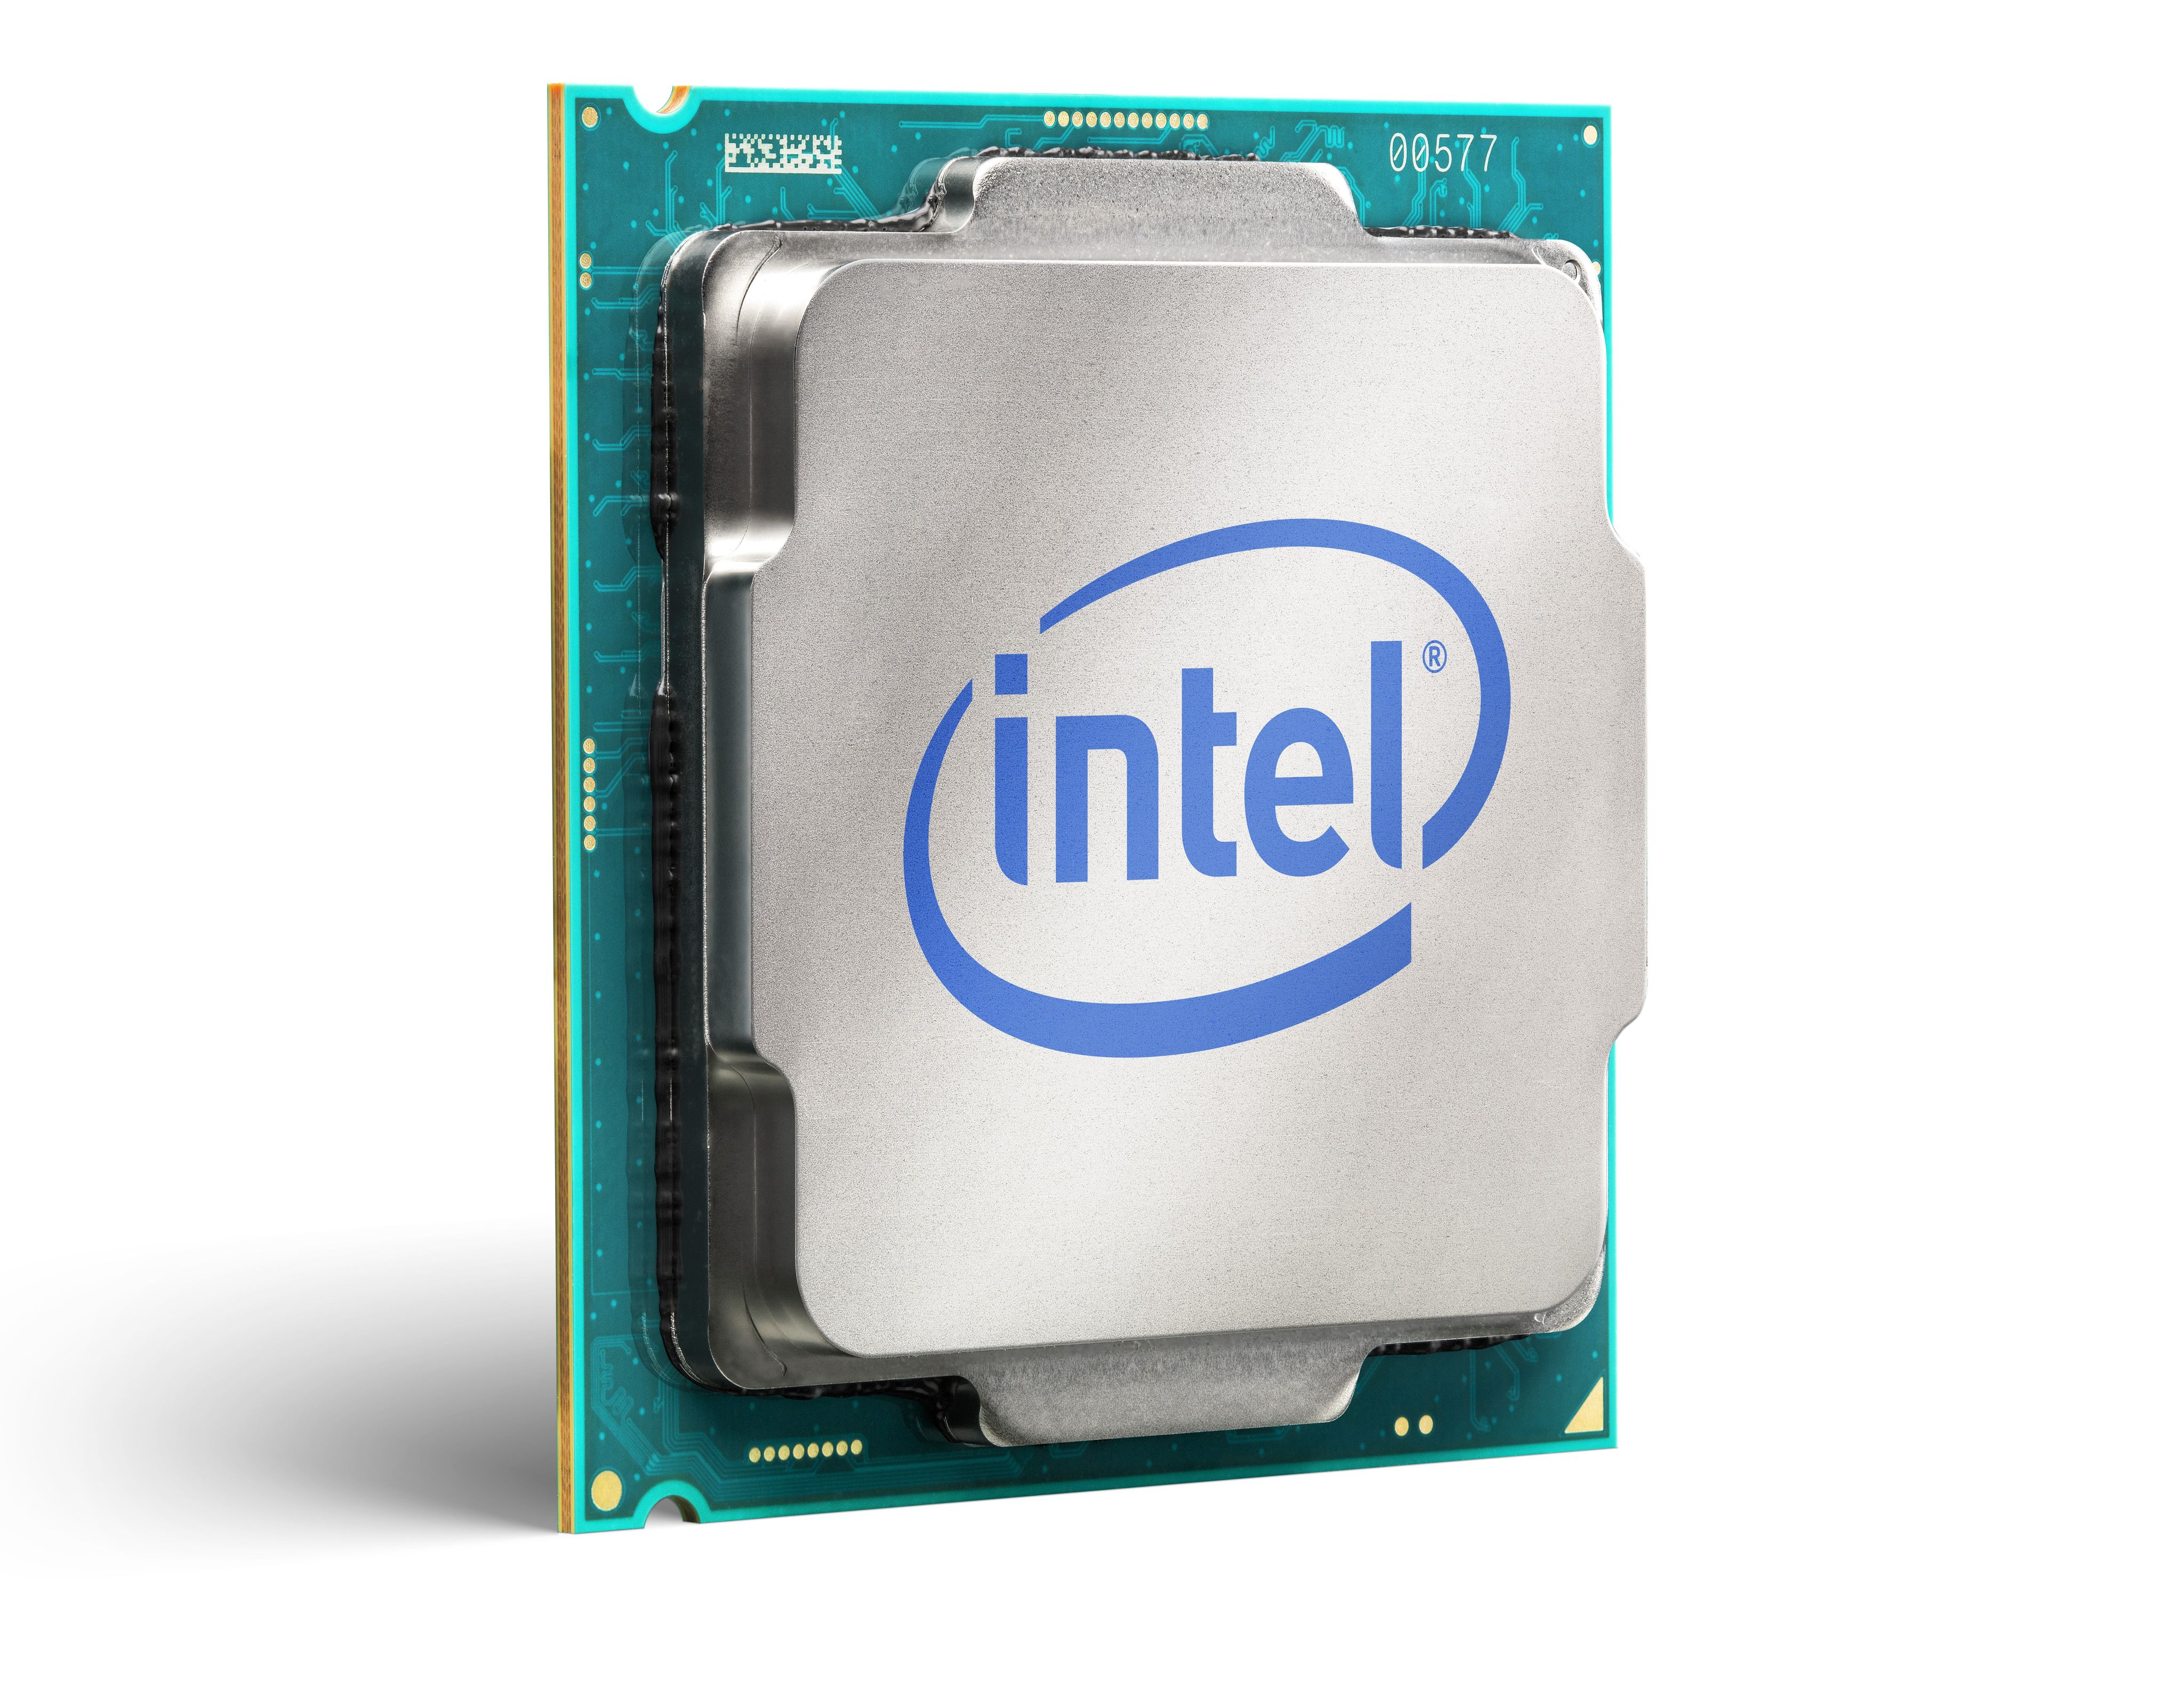 Процессор Intel Xeon e5-1680v3 Haswell-Ep. Процессор Intel Xeon e5-2623v3. Процессор CPU Intel Core i7. Intel Pentium Core i7. Процессор интел для игр